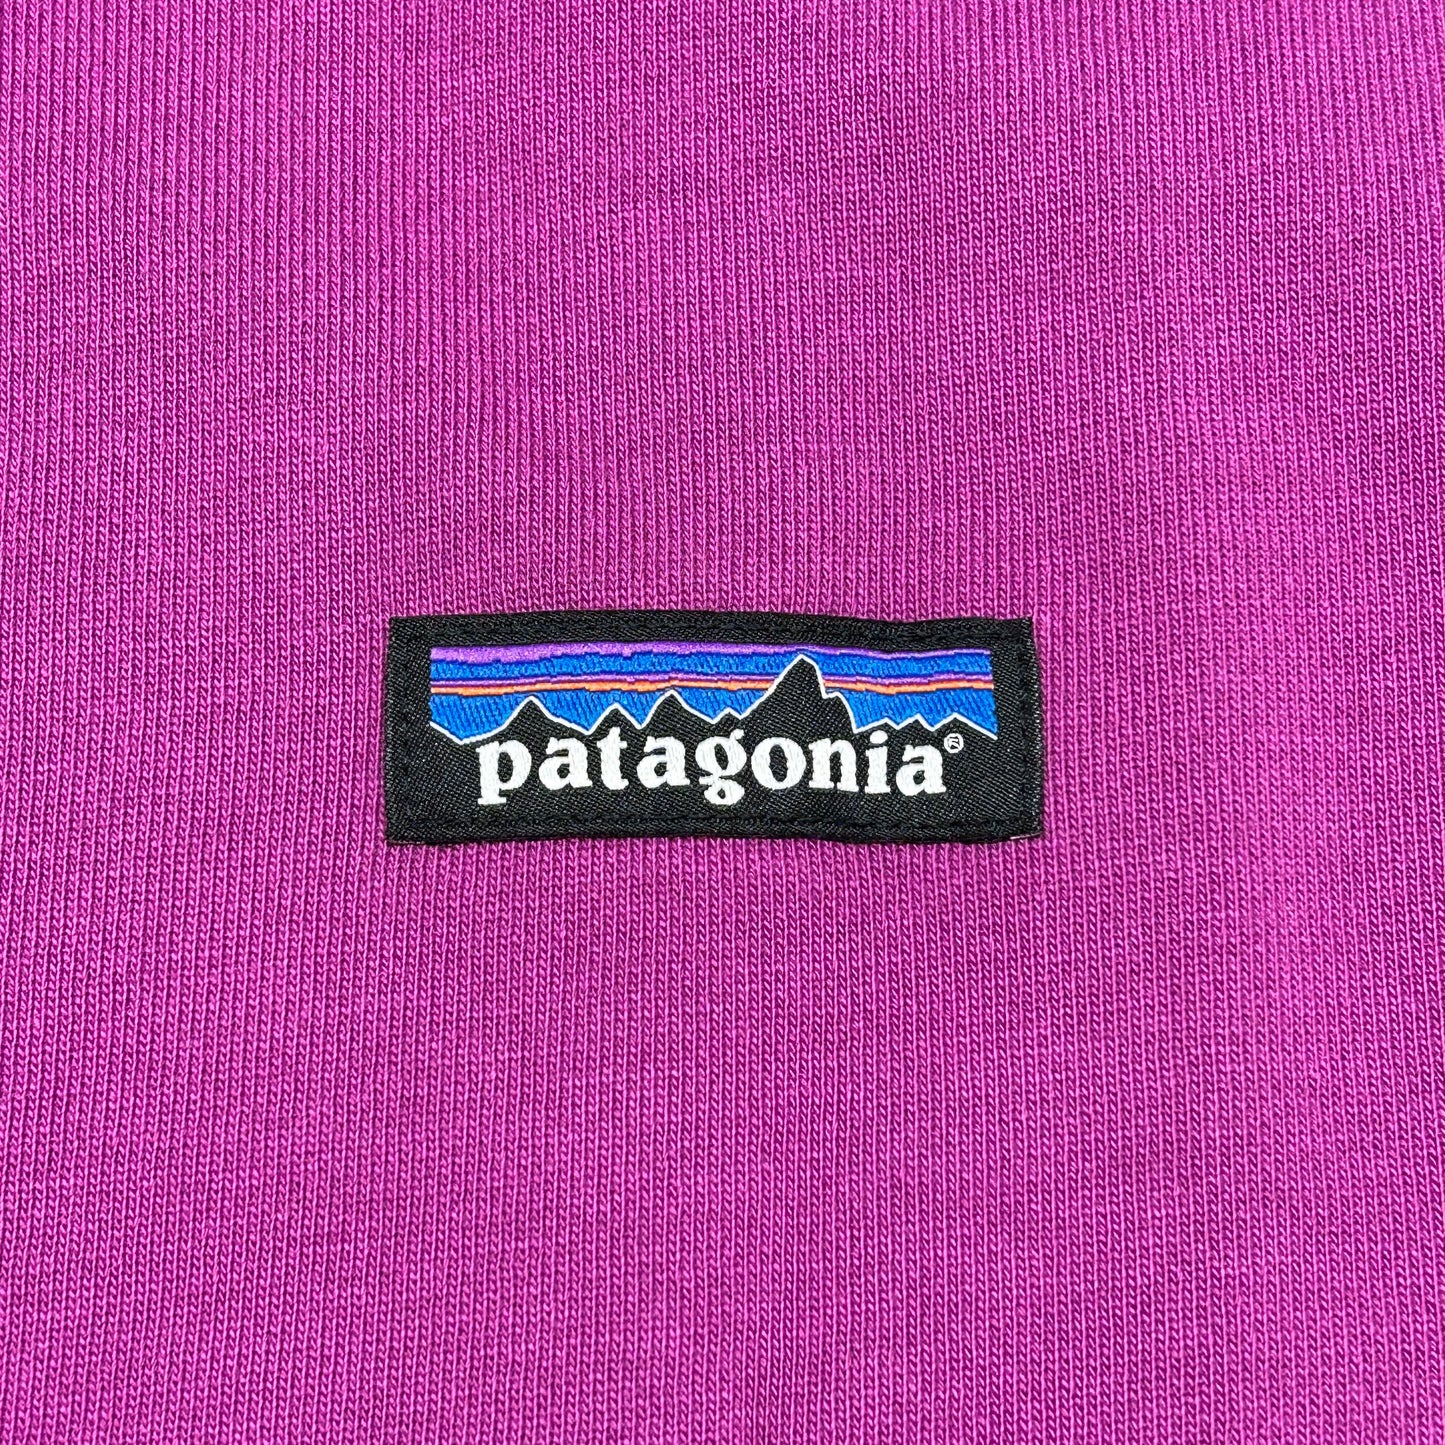 PATAGONIA Regenerative Organic Cotton Hoody Sweatshirt Sz L Amaranth Pink (New)